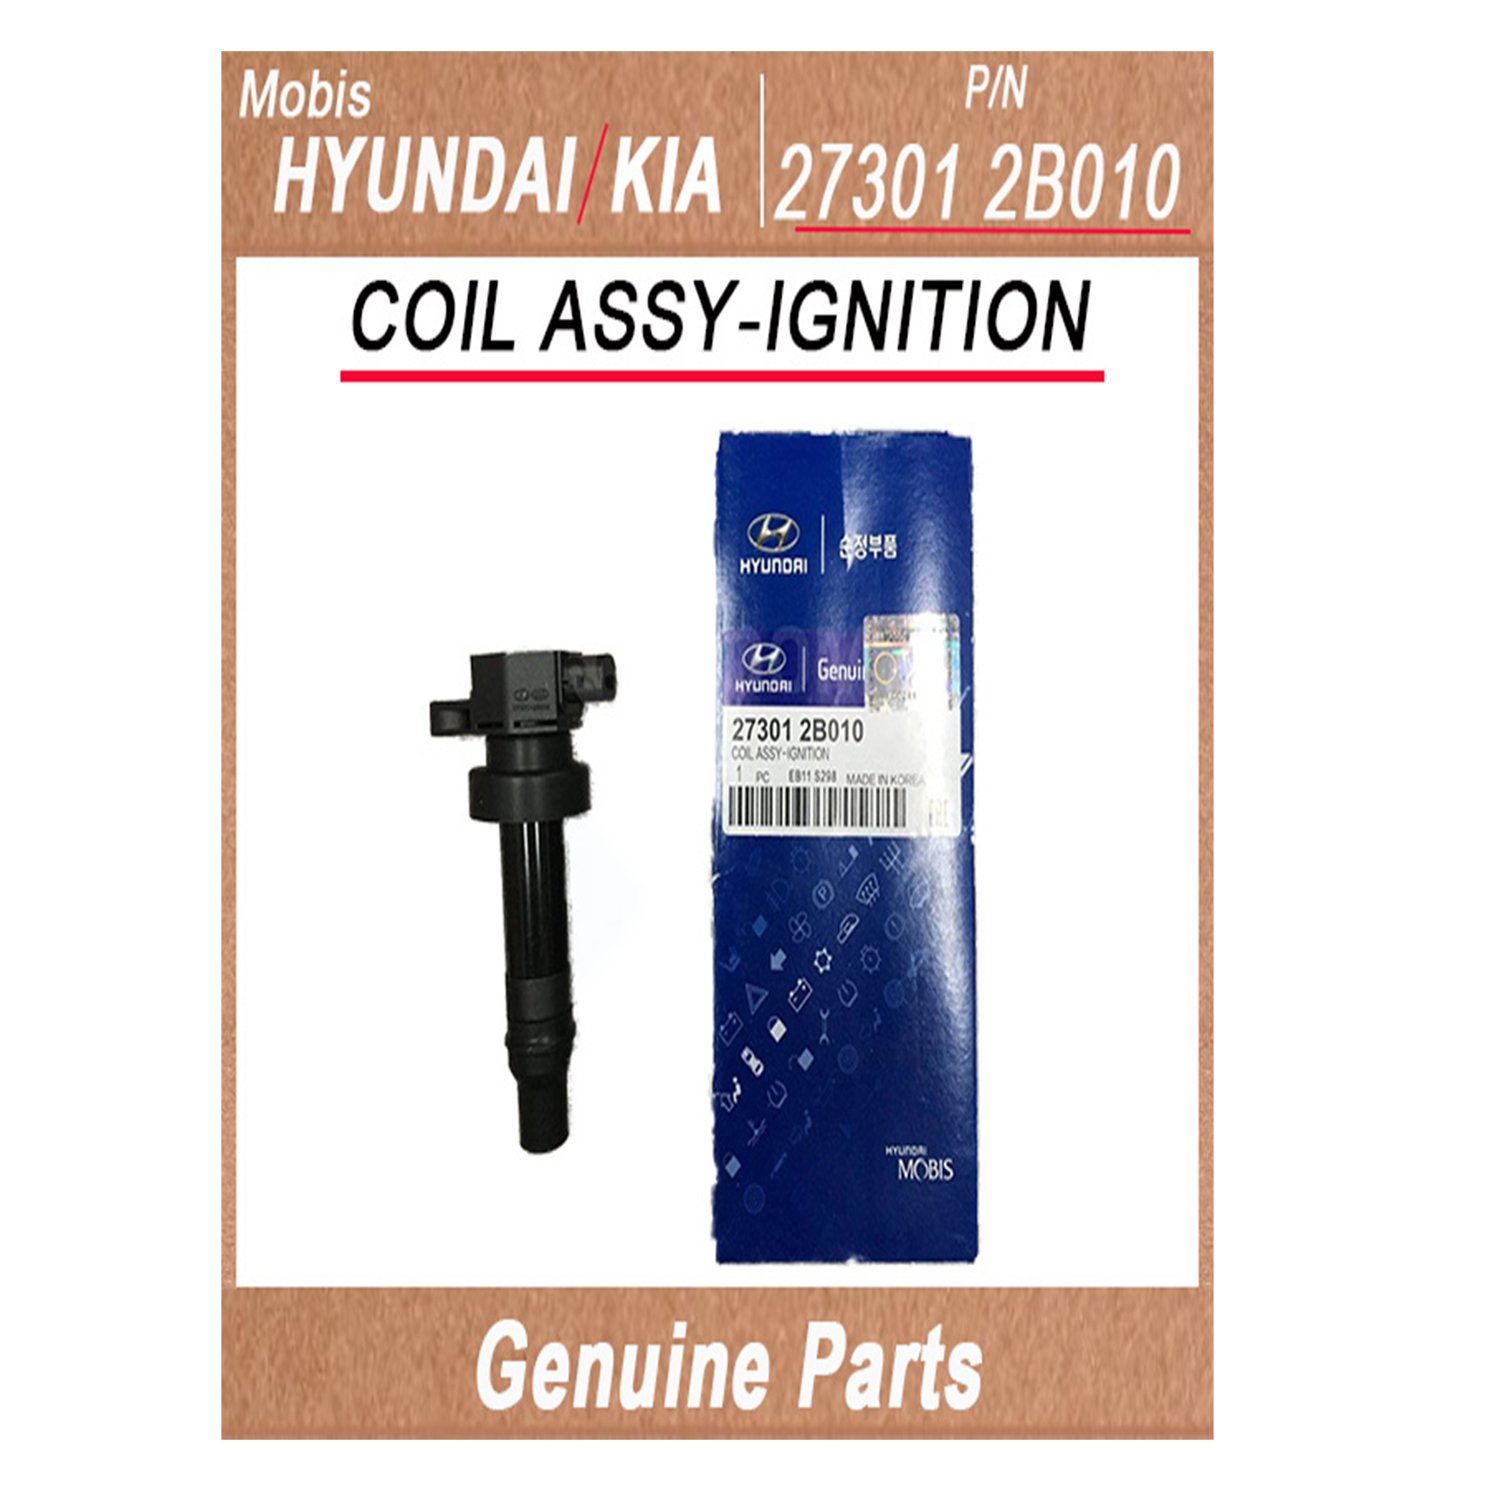 273012B010 _ COIL ASSY_IGNITION _ Genuine Korean Automotive Spare Parts _ Hyundai Kia _Mobis_